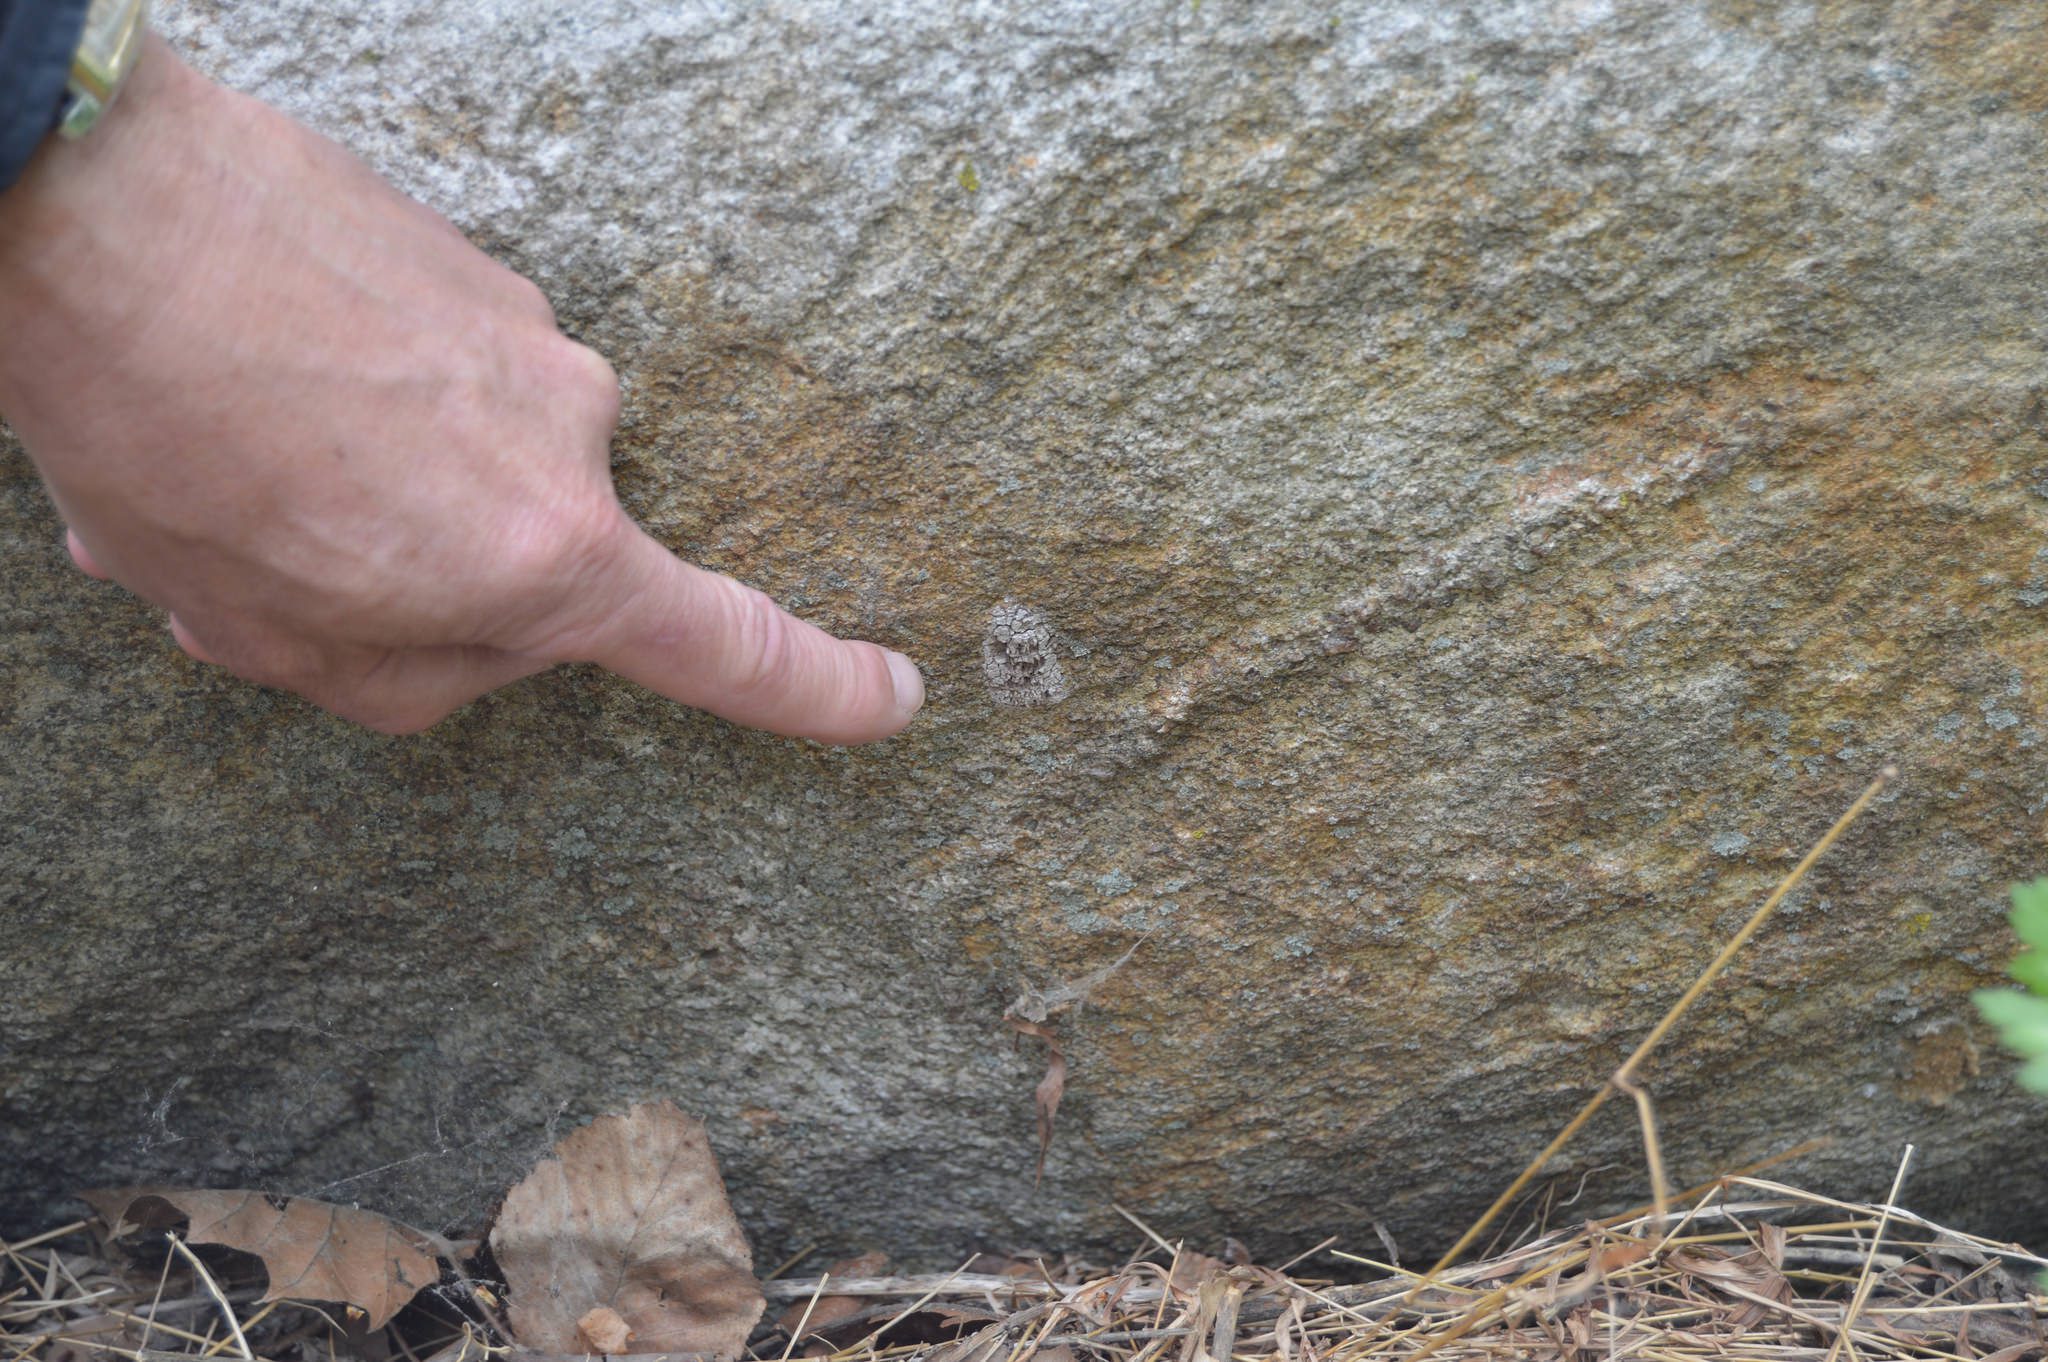 Lanternfly egg mass on a rock